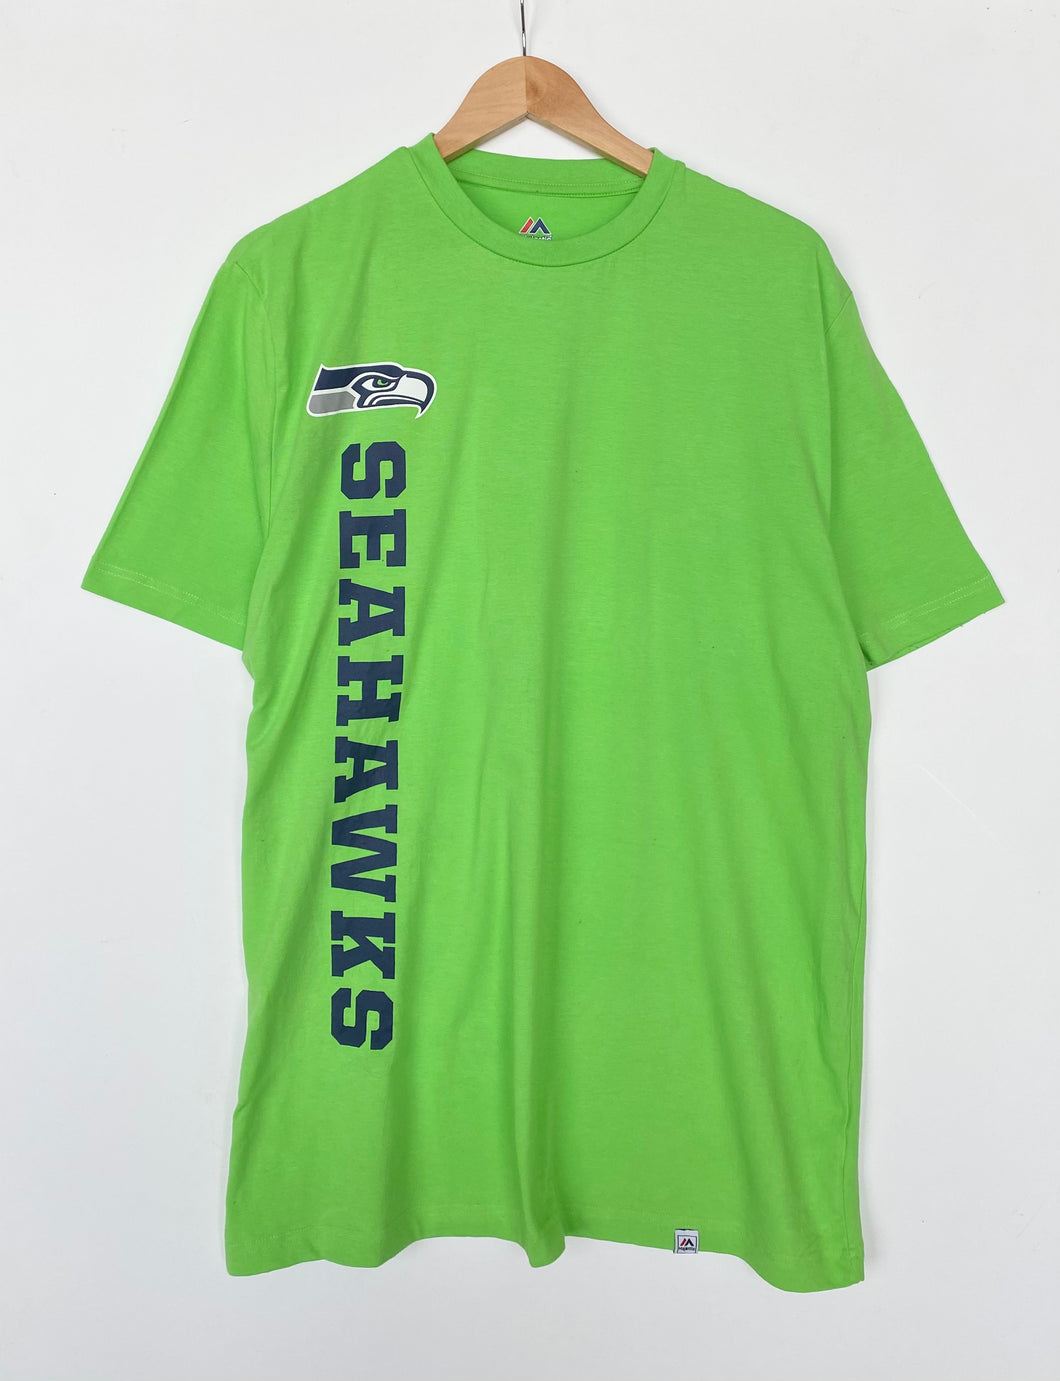 Seattle Seahawks NFL t-shirt (XL)